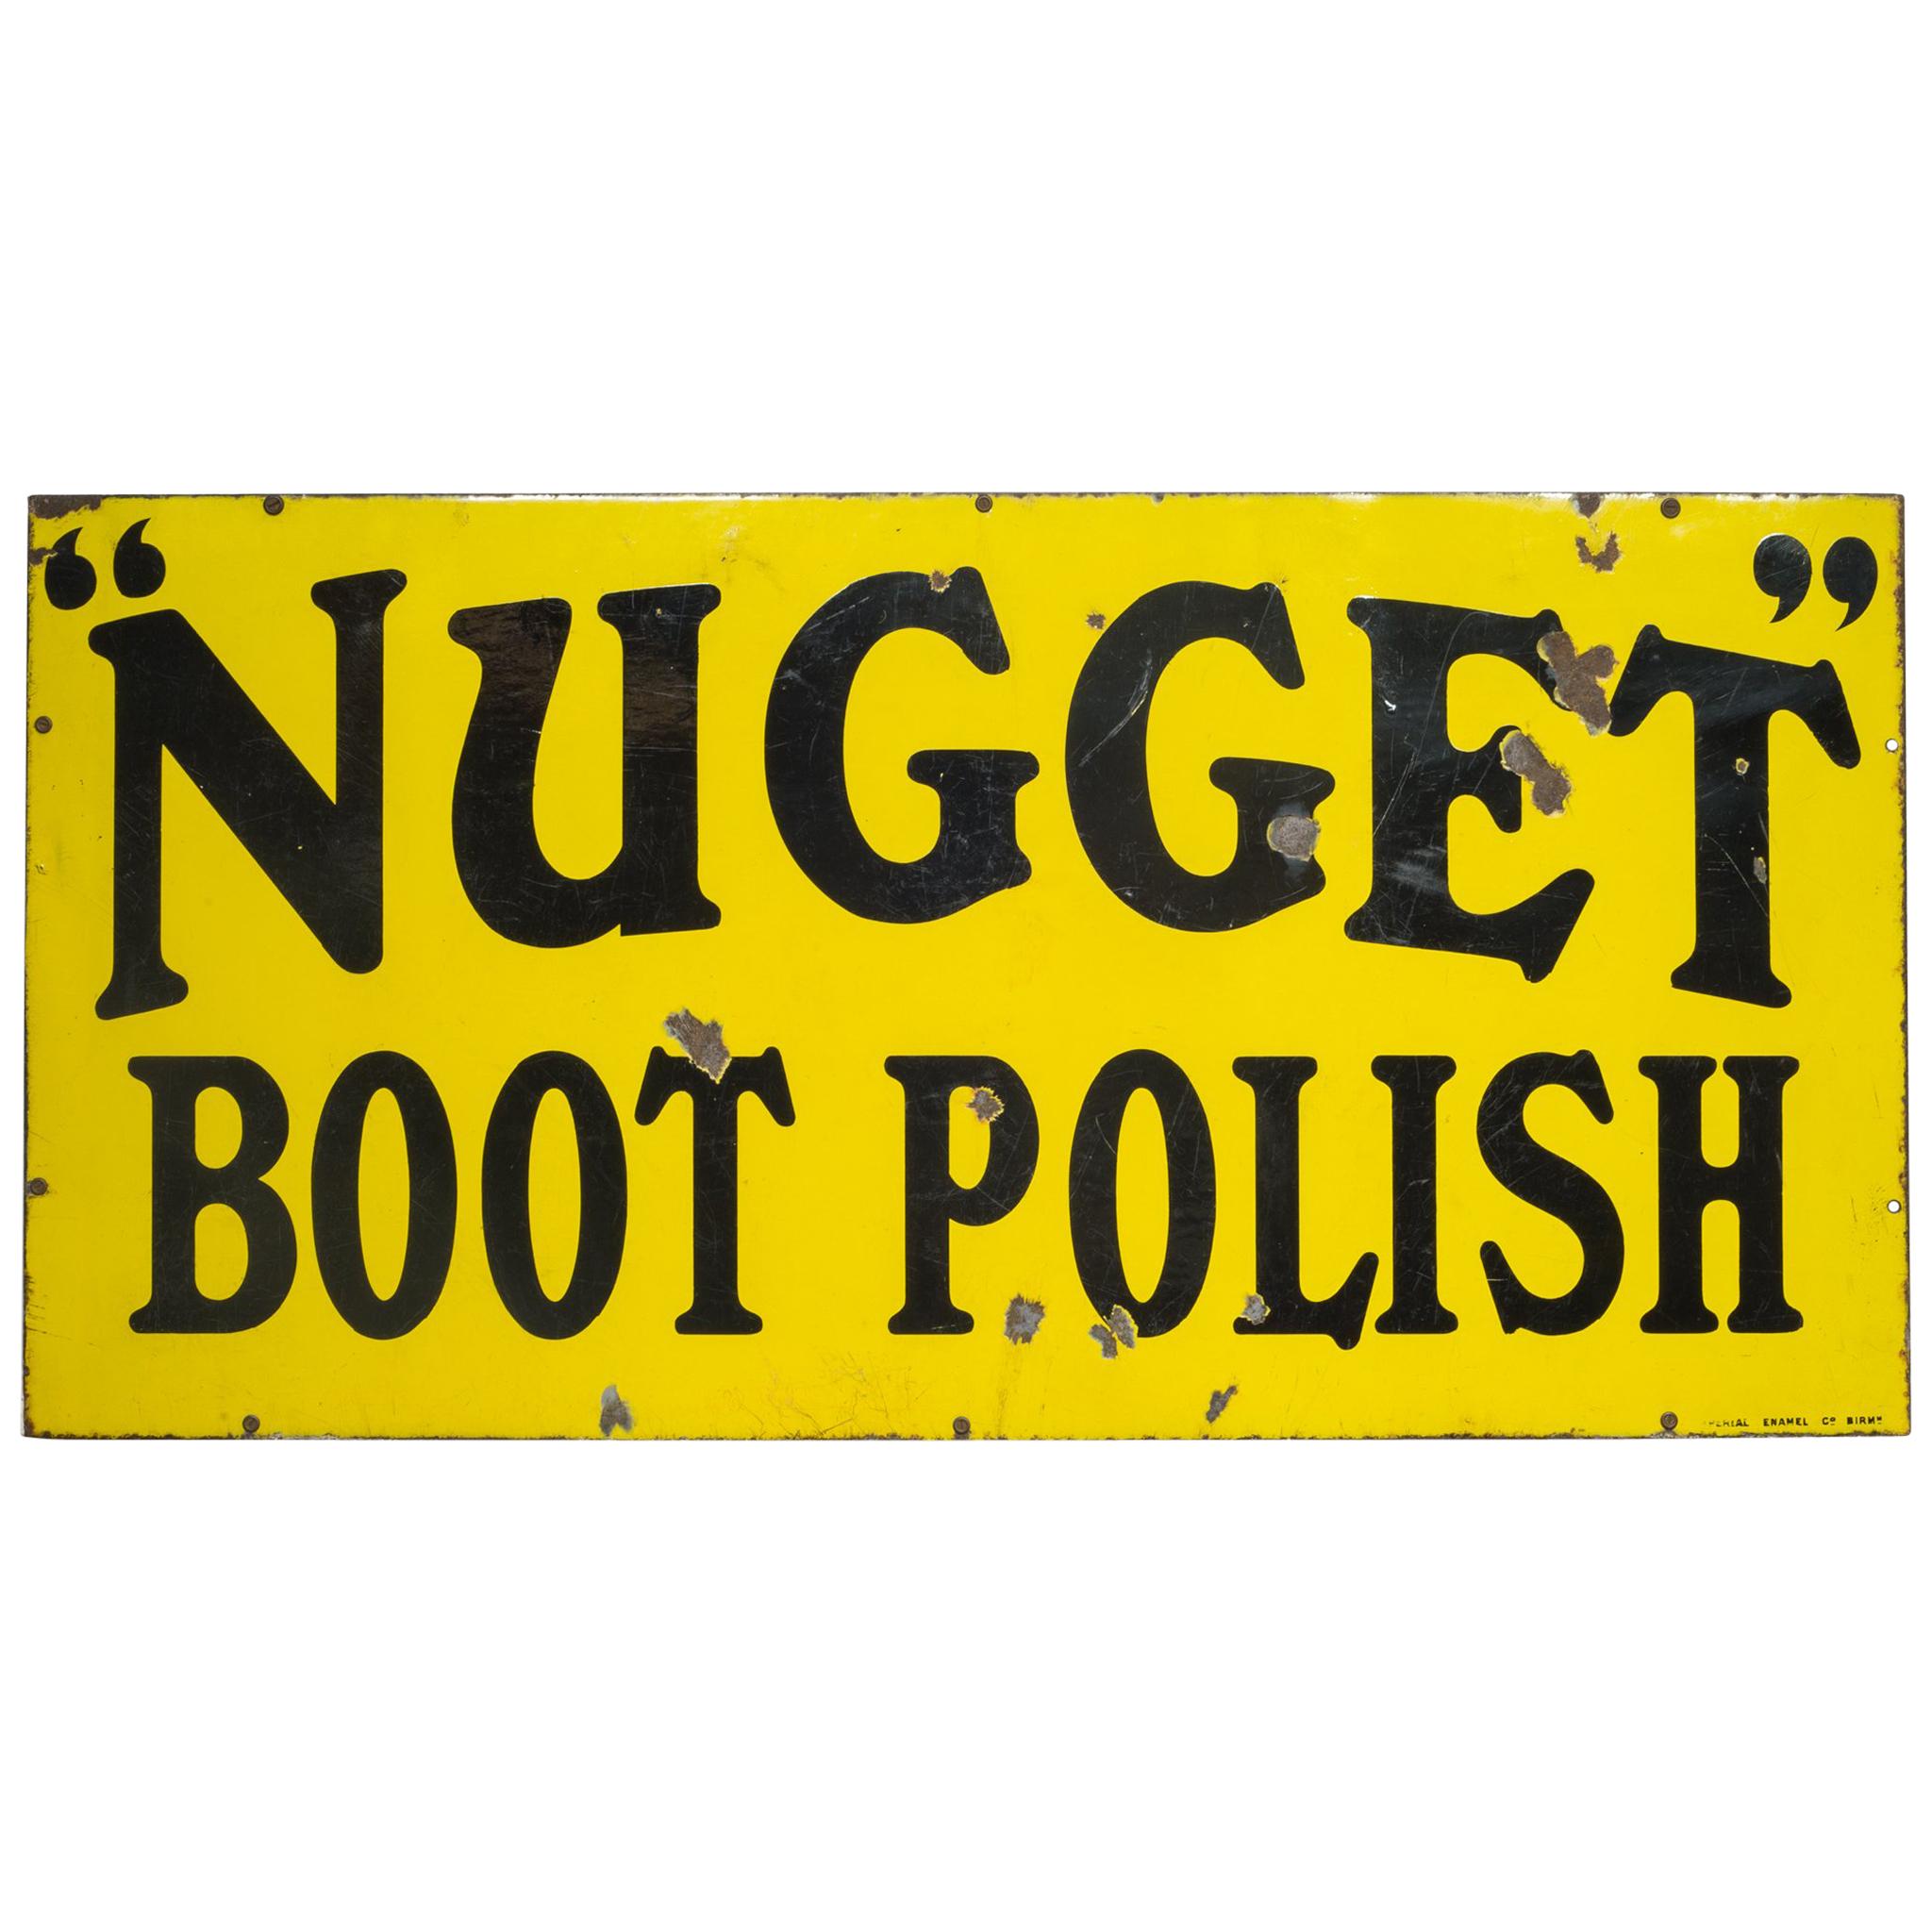 Enameled Nugget Boot Polish Sign, circa 1920-1950